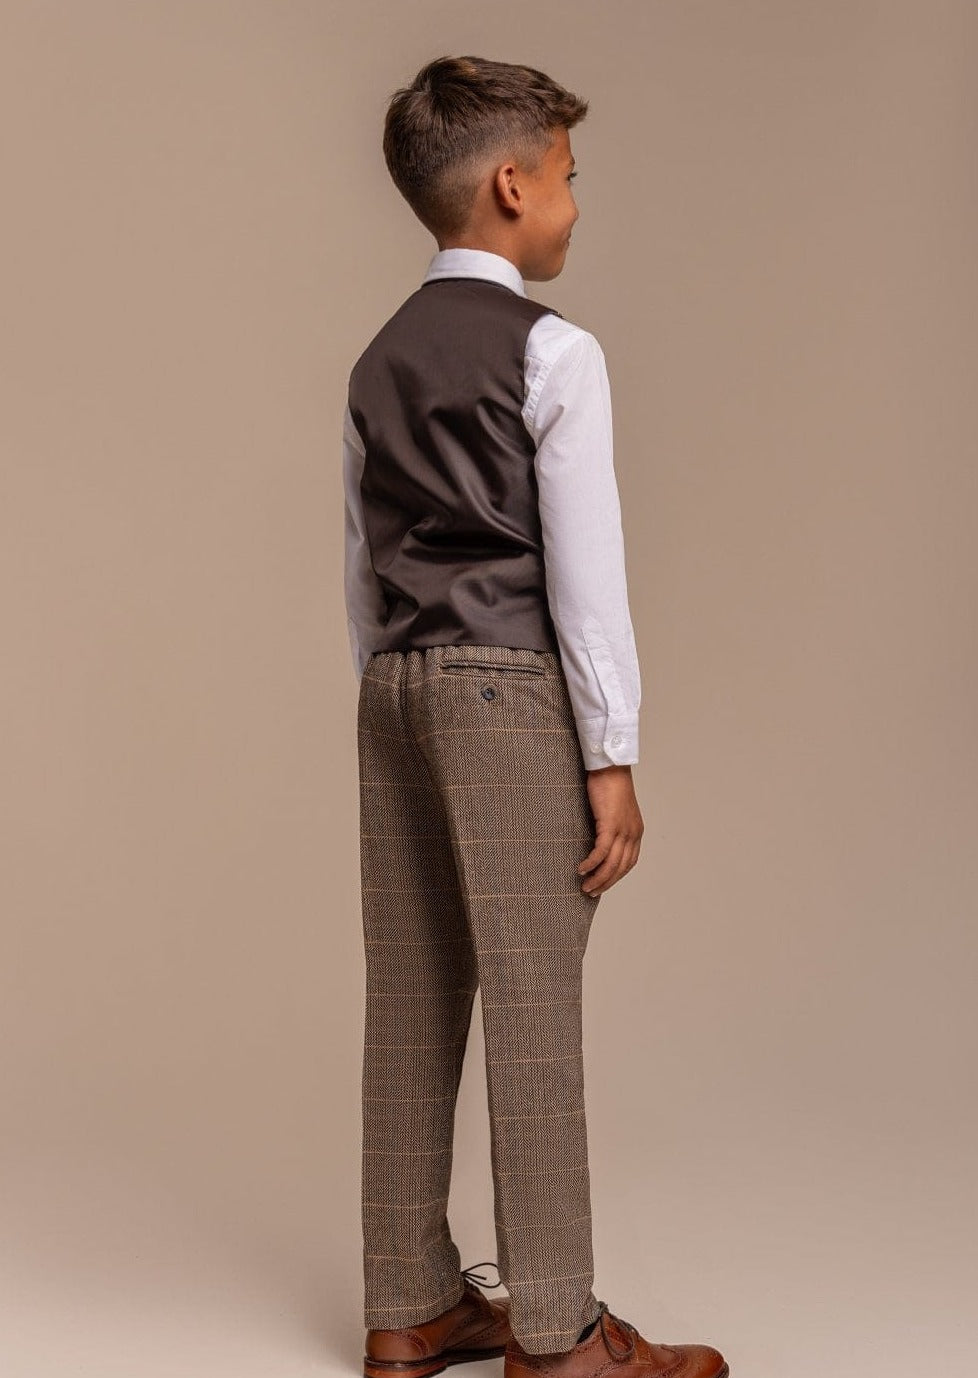 Wholesale 5-Piece Boys Suit Set with Vest Shirt Jacket Pants and Bowti 5-8Y  Terry 1036-5741 Boys Sets Terry